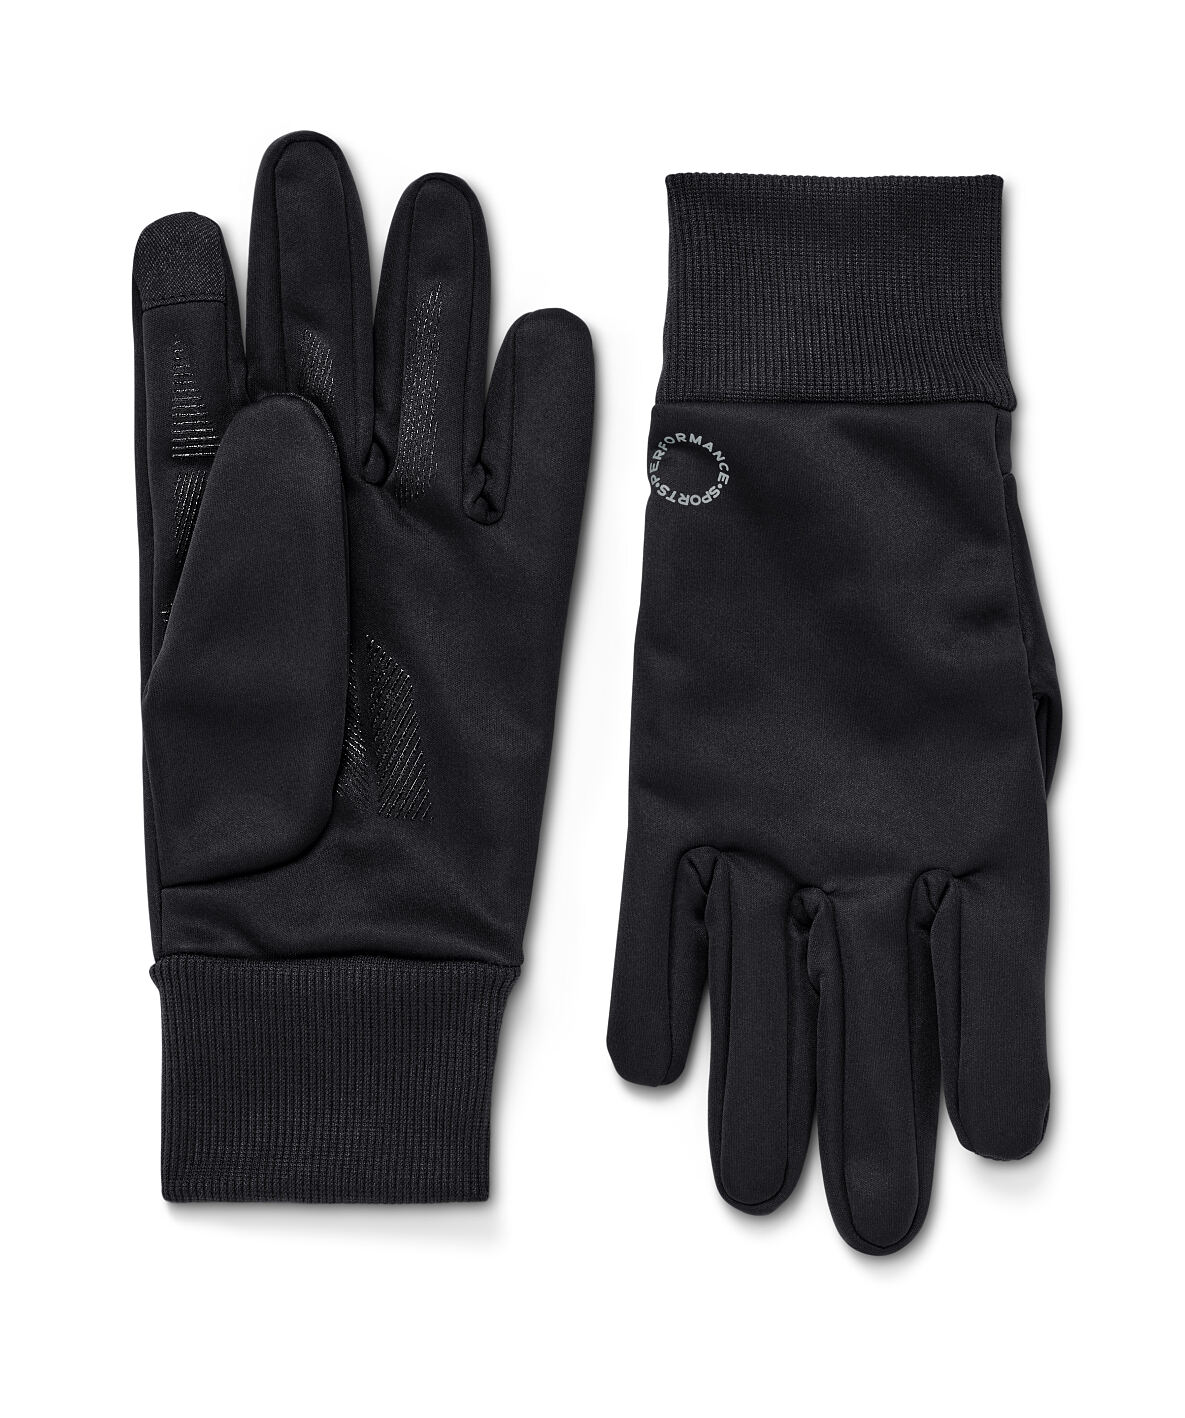 134635 Windprotection-Handschuhe FS 1 03.24